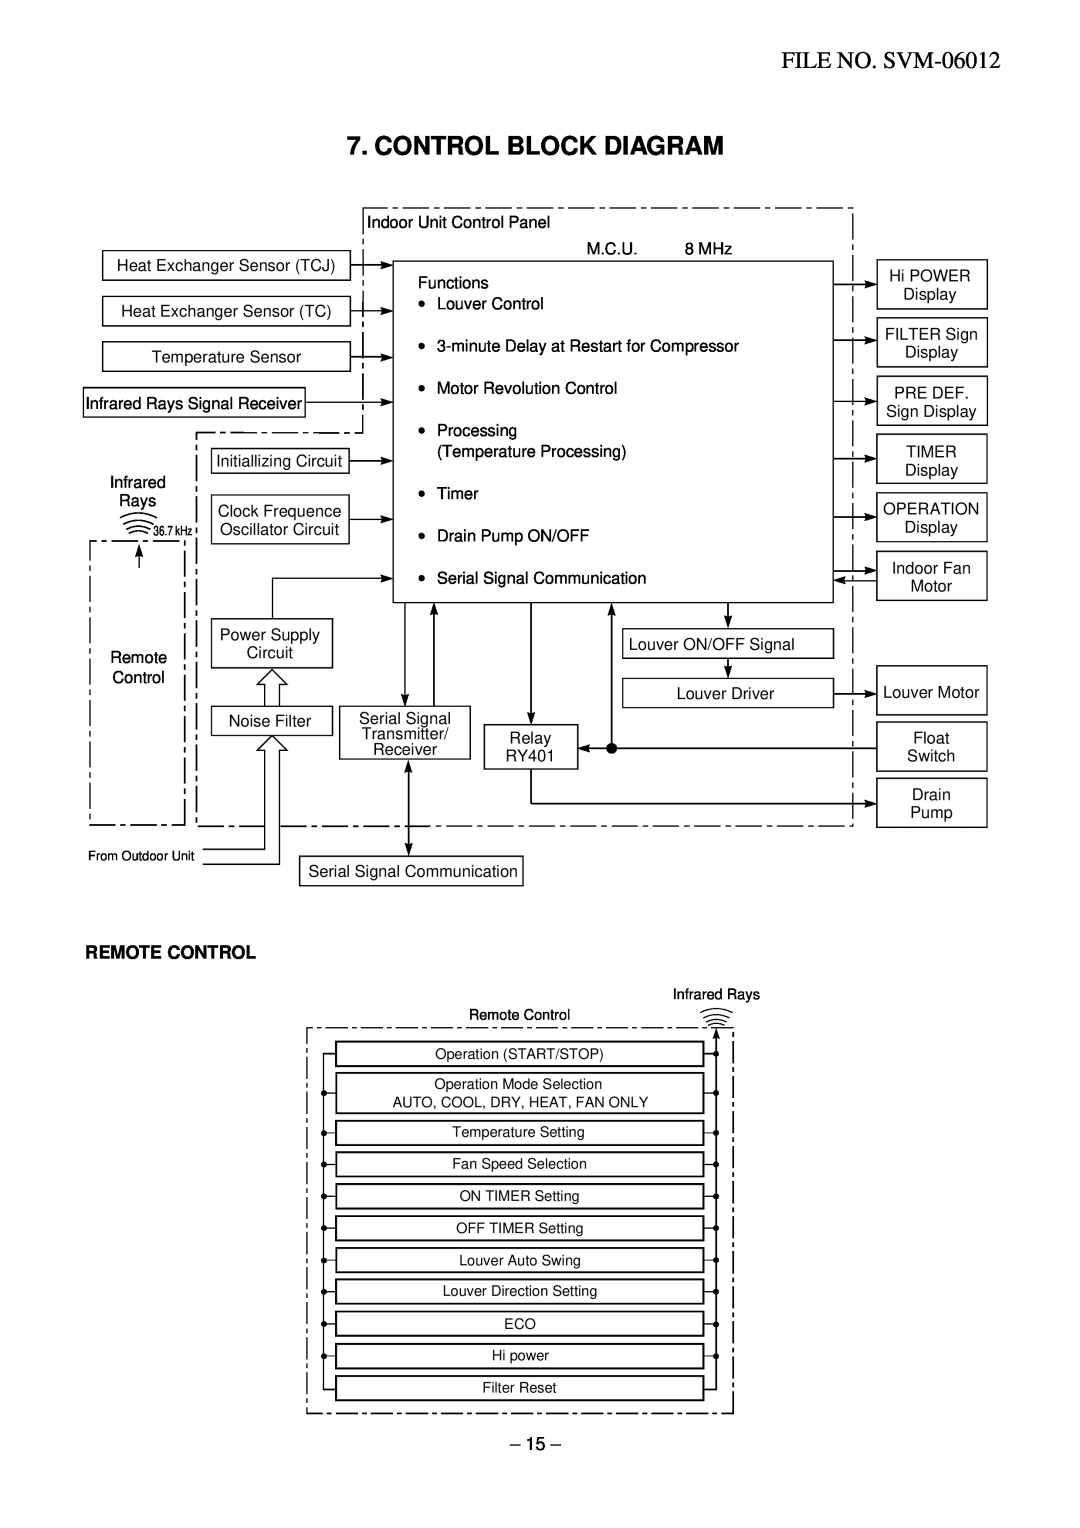 Toshiba RAV-SM562AT-E, RAV-SM802XT-E, RAV-SM802AT-E service manual Control Block Diagram, FILE NO. SVM-06012, Remote Control 